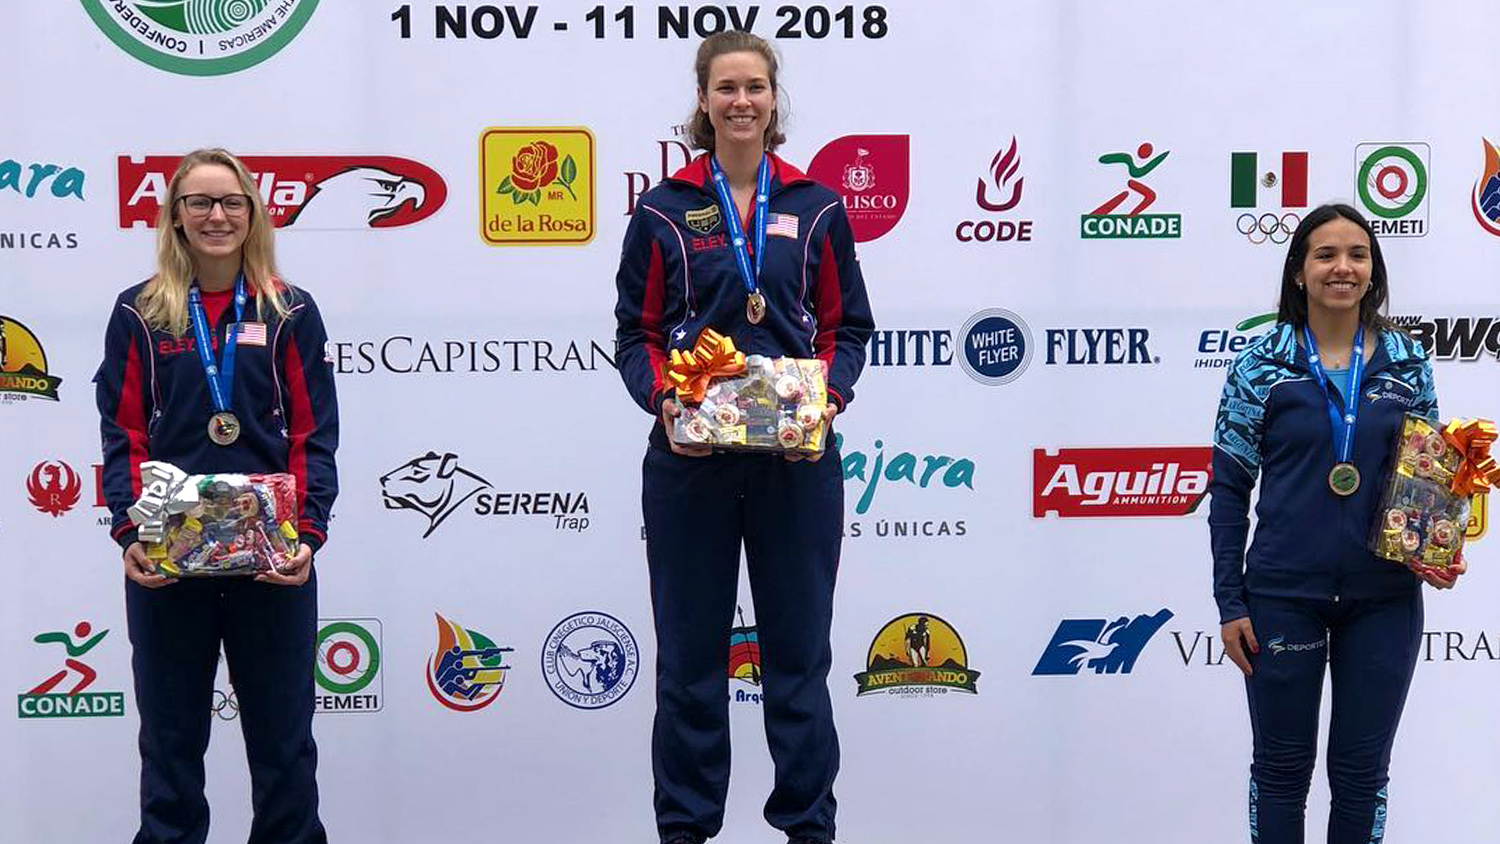 2018 Championship of the Americas | Women’s Air Rifle podium